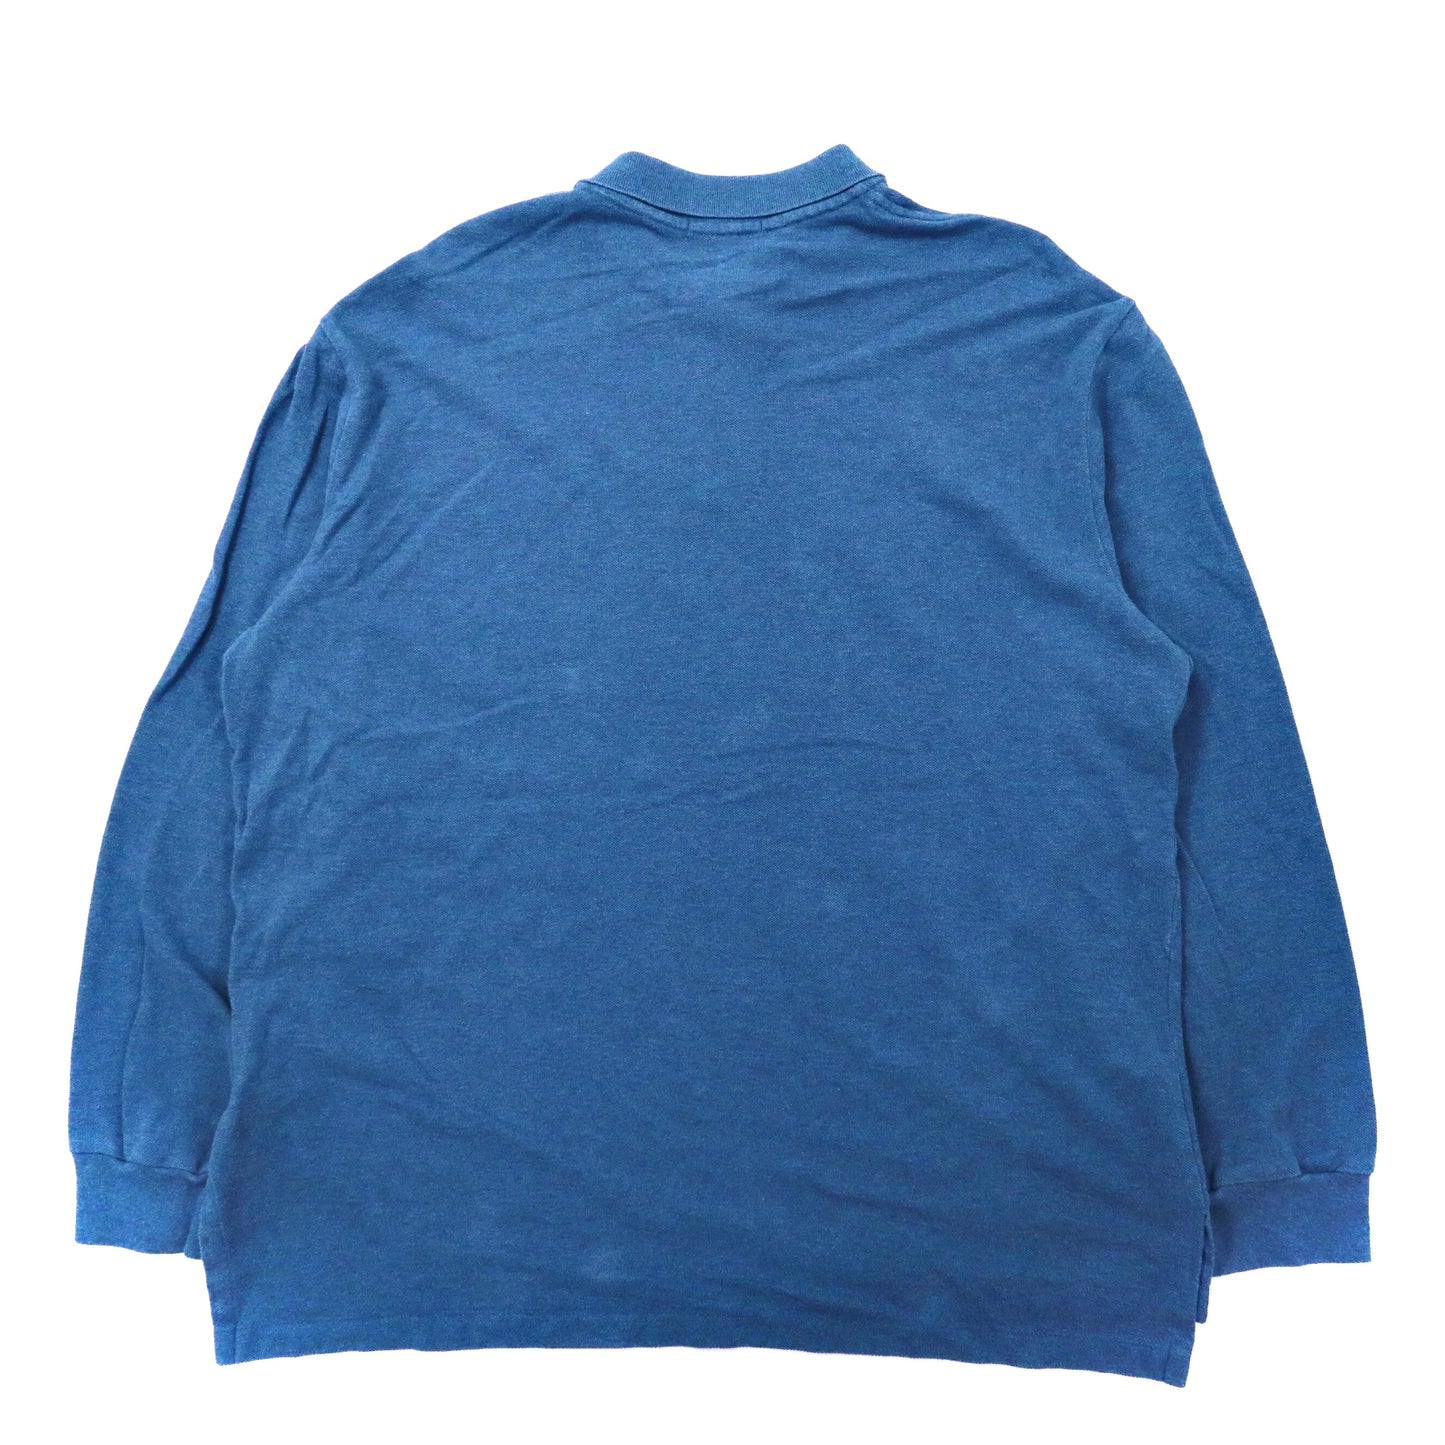 POLO RALPH LAUREN ビッグサイズ 長袖ポロシャツ XL ブルー コットン 鹿の子 スモールポニー刺繍